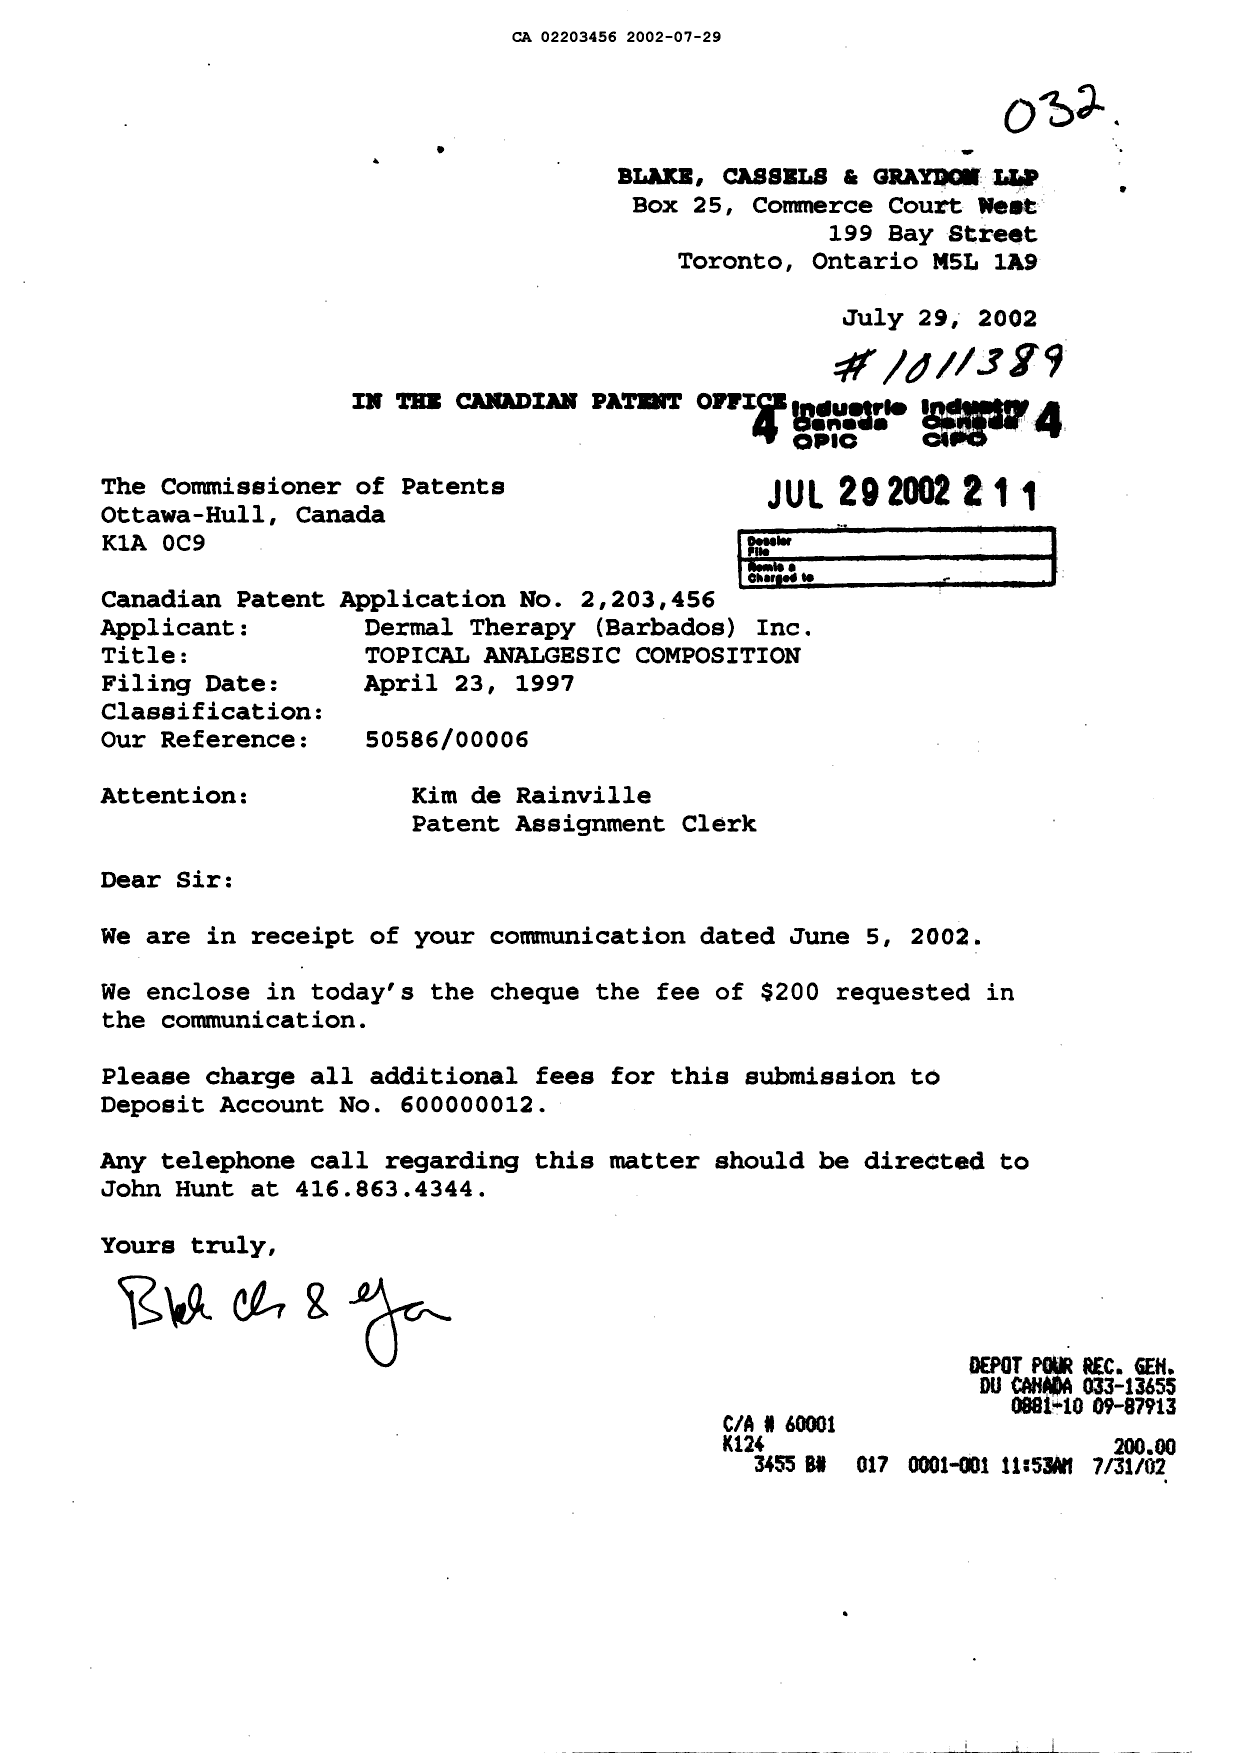 Canadian Patent Document 2203456. Correspondence 20020729. Image 1 of 1